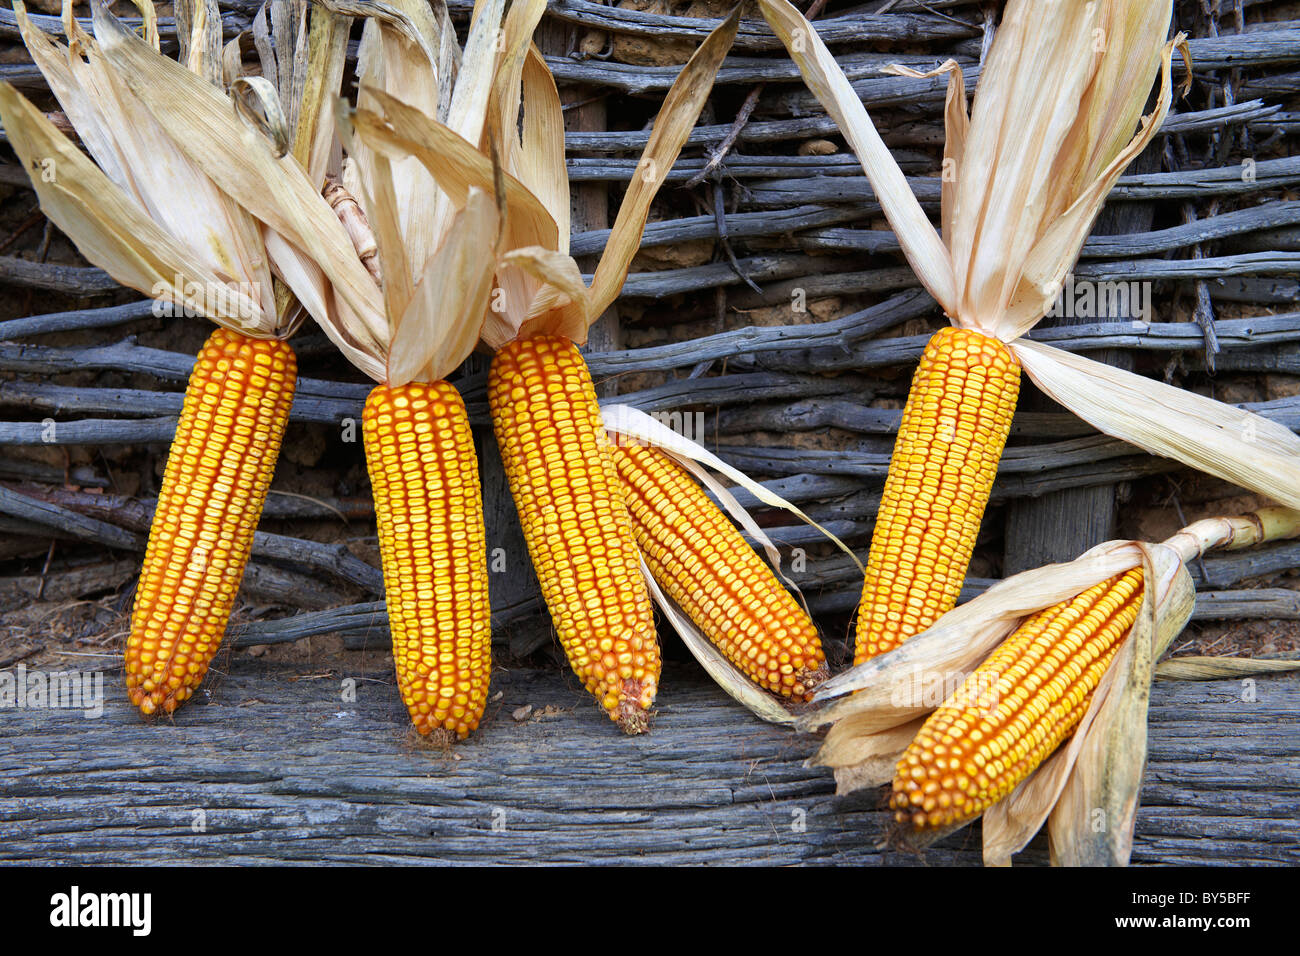 Corn cobs drying - Hungary Stock Photo